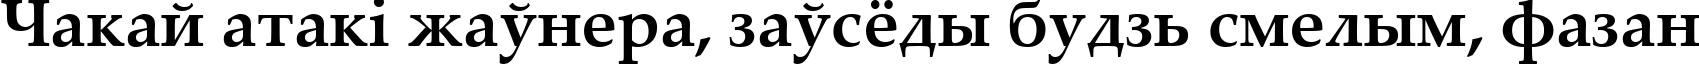 Пример написания шрифтом Palatino Linotype Bold текста на белорусском